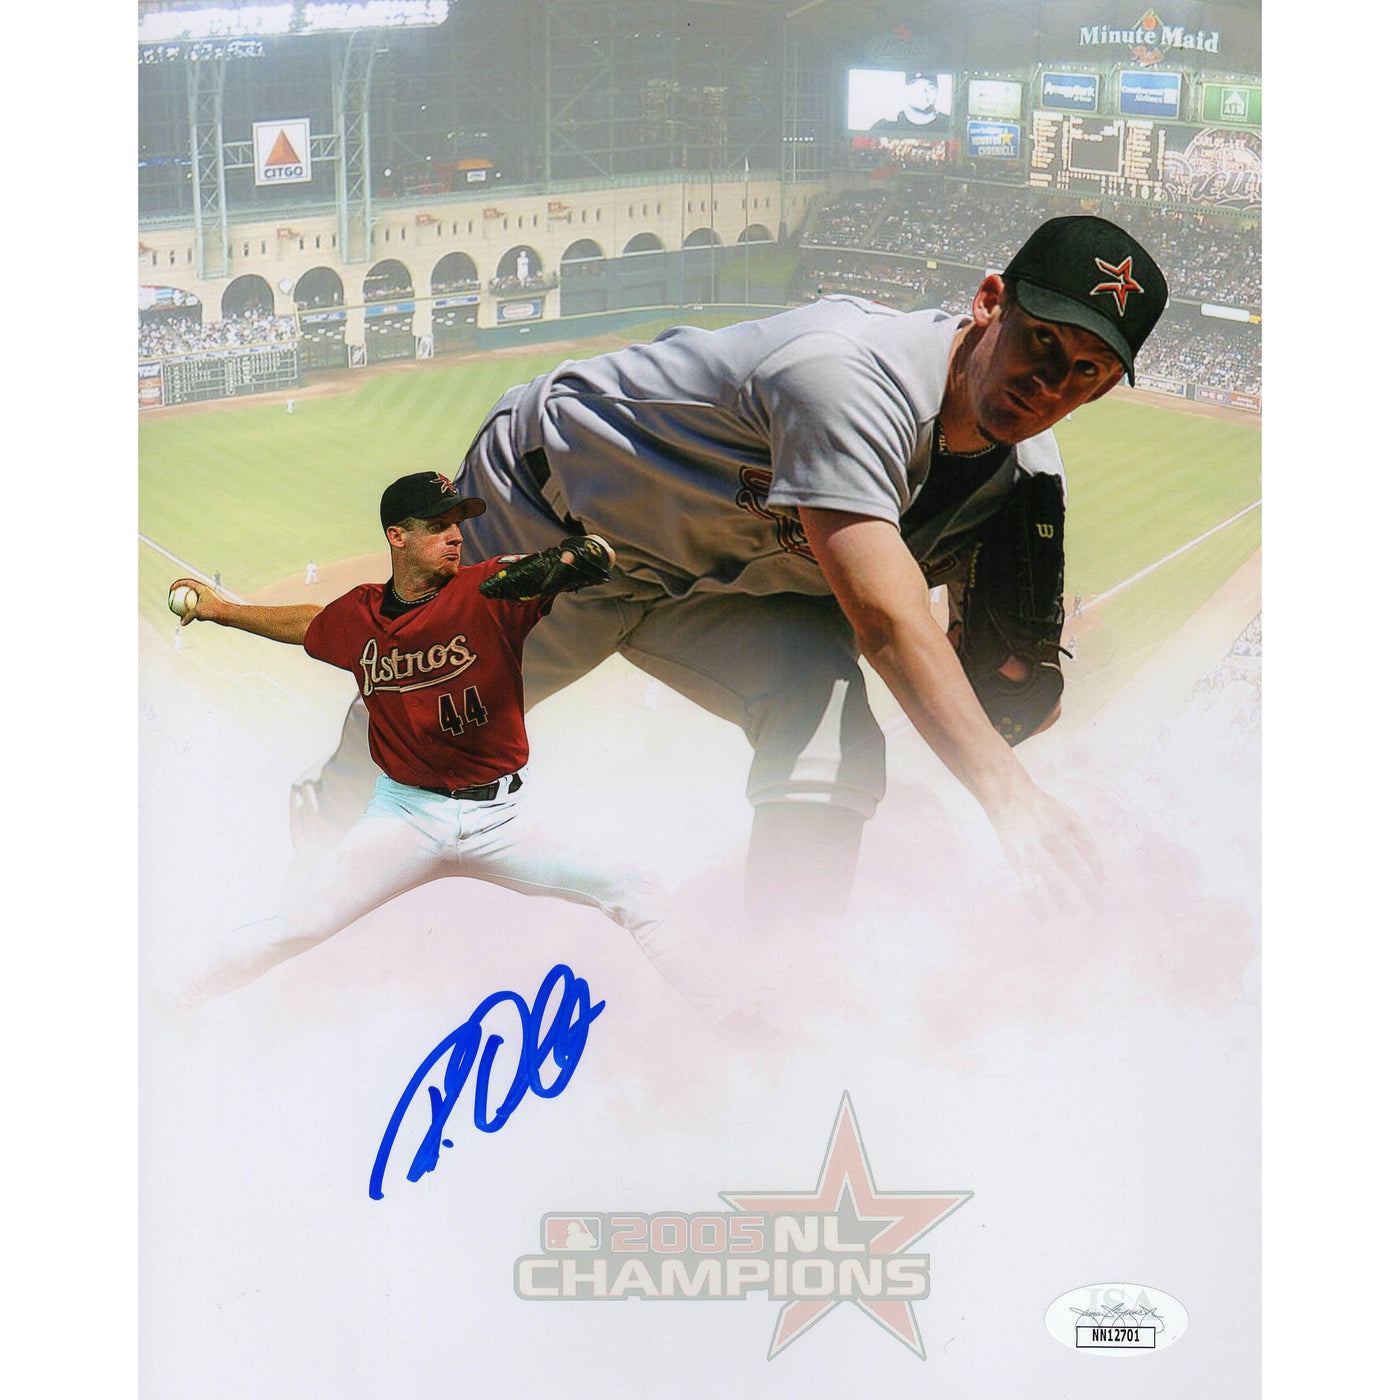 Roy Oswalt Autograph 8x10 Photo Houston Astros Pitcher Signed JSA COA 5